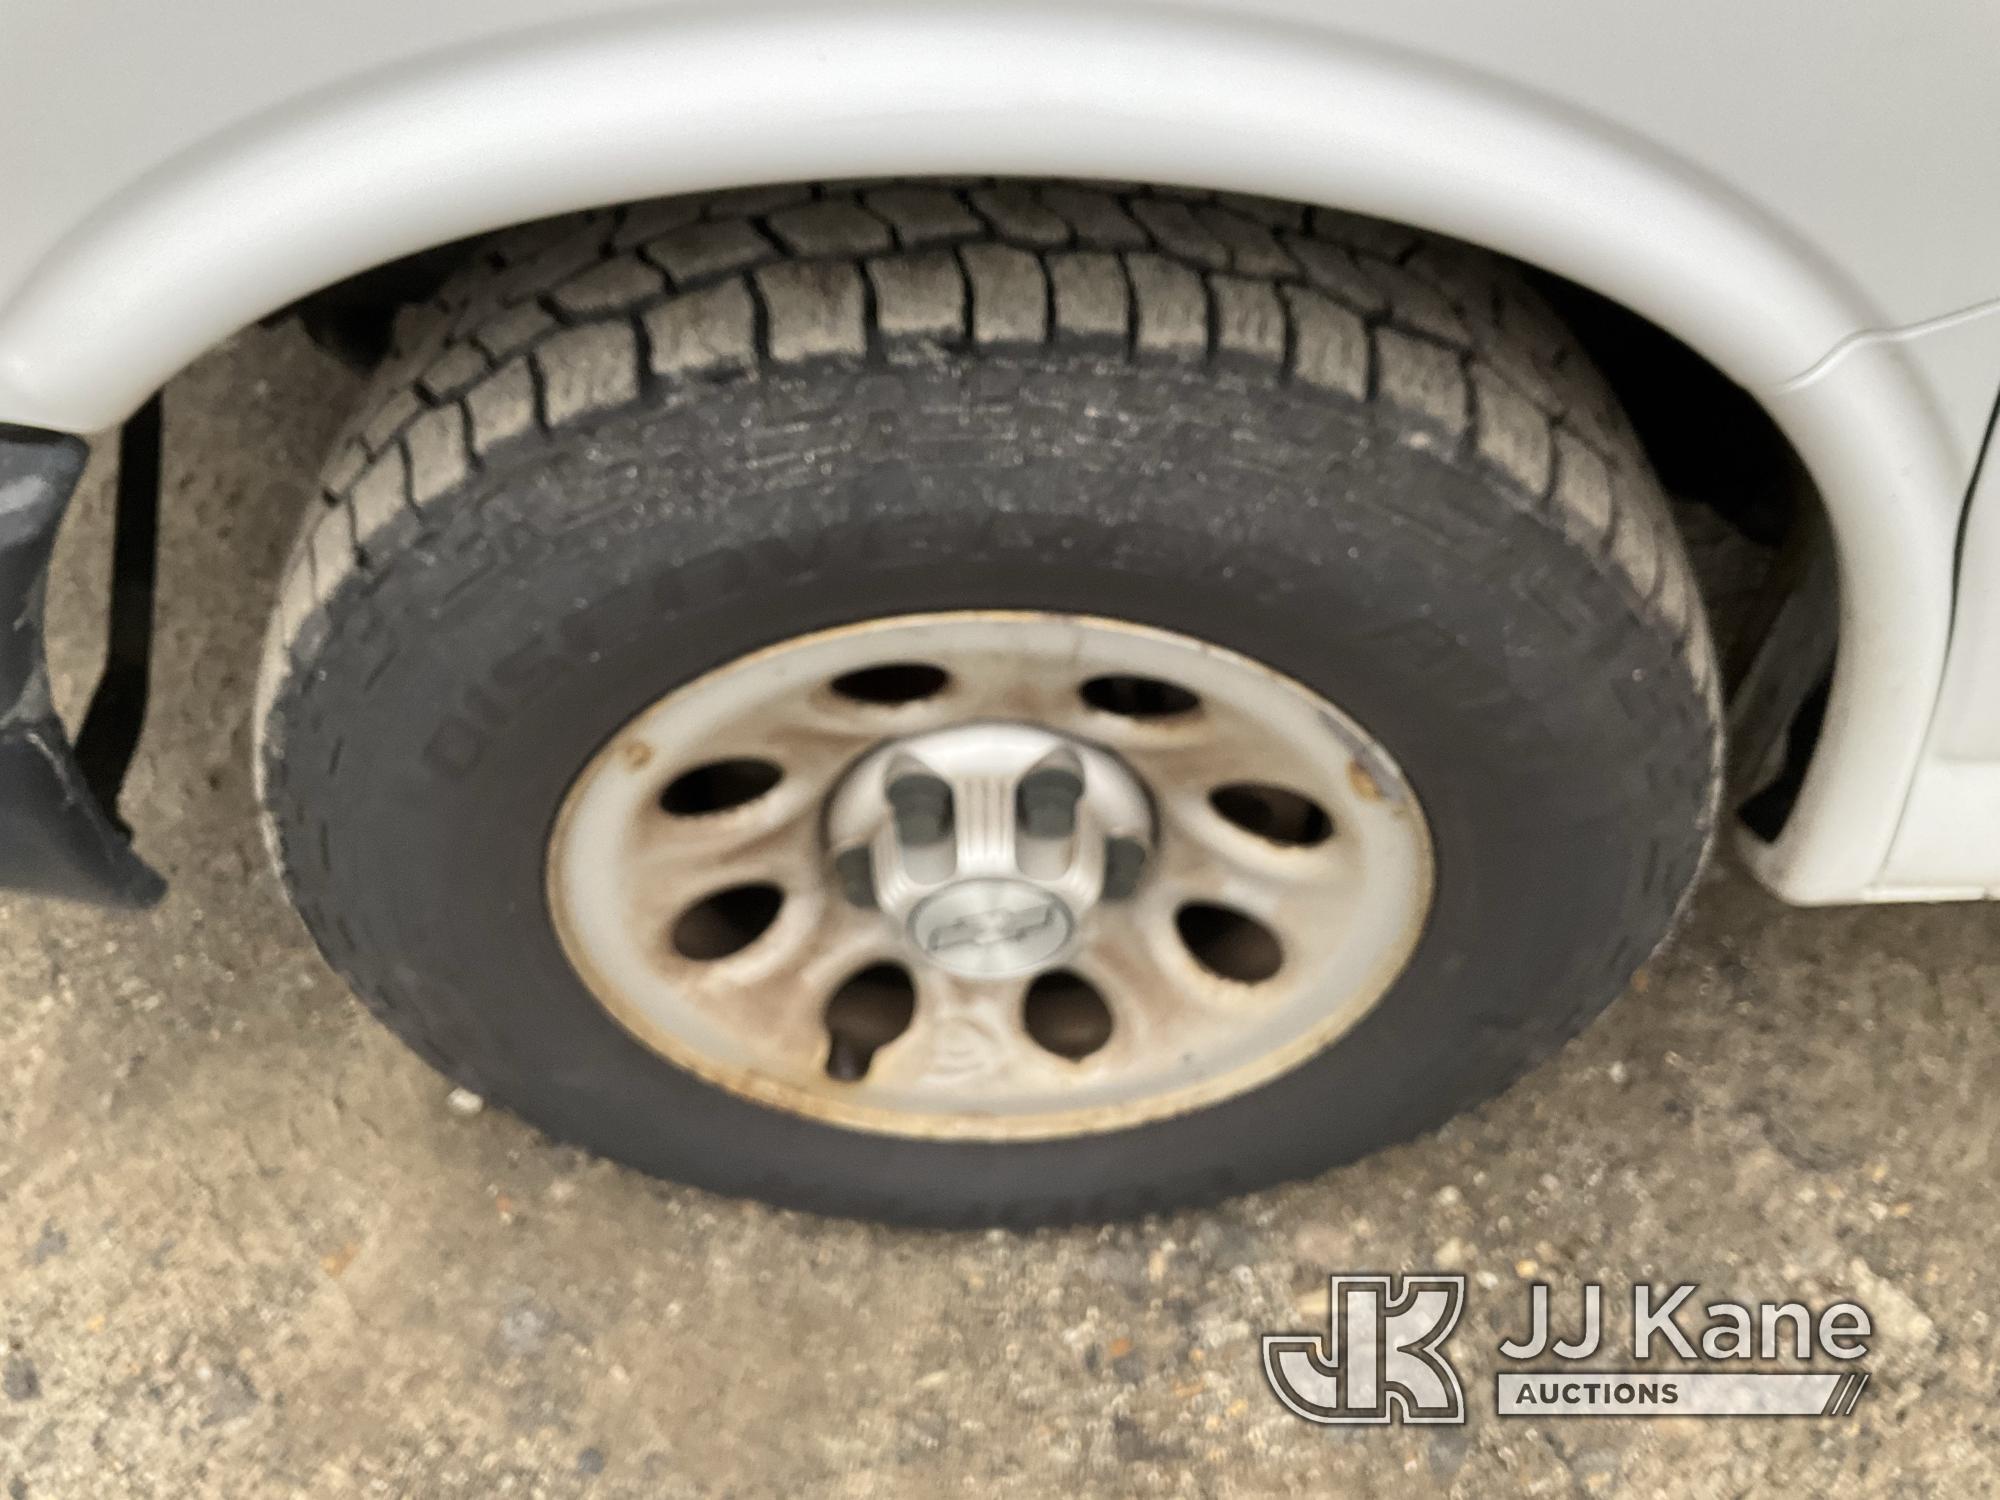 (Shrewsbury, MA) 2014 Chevrolet Express G1500 AWD Cargo Van Runs & Moves) (Rust Damage, Bad Curbside